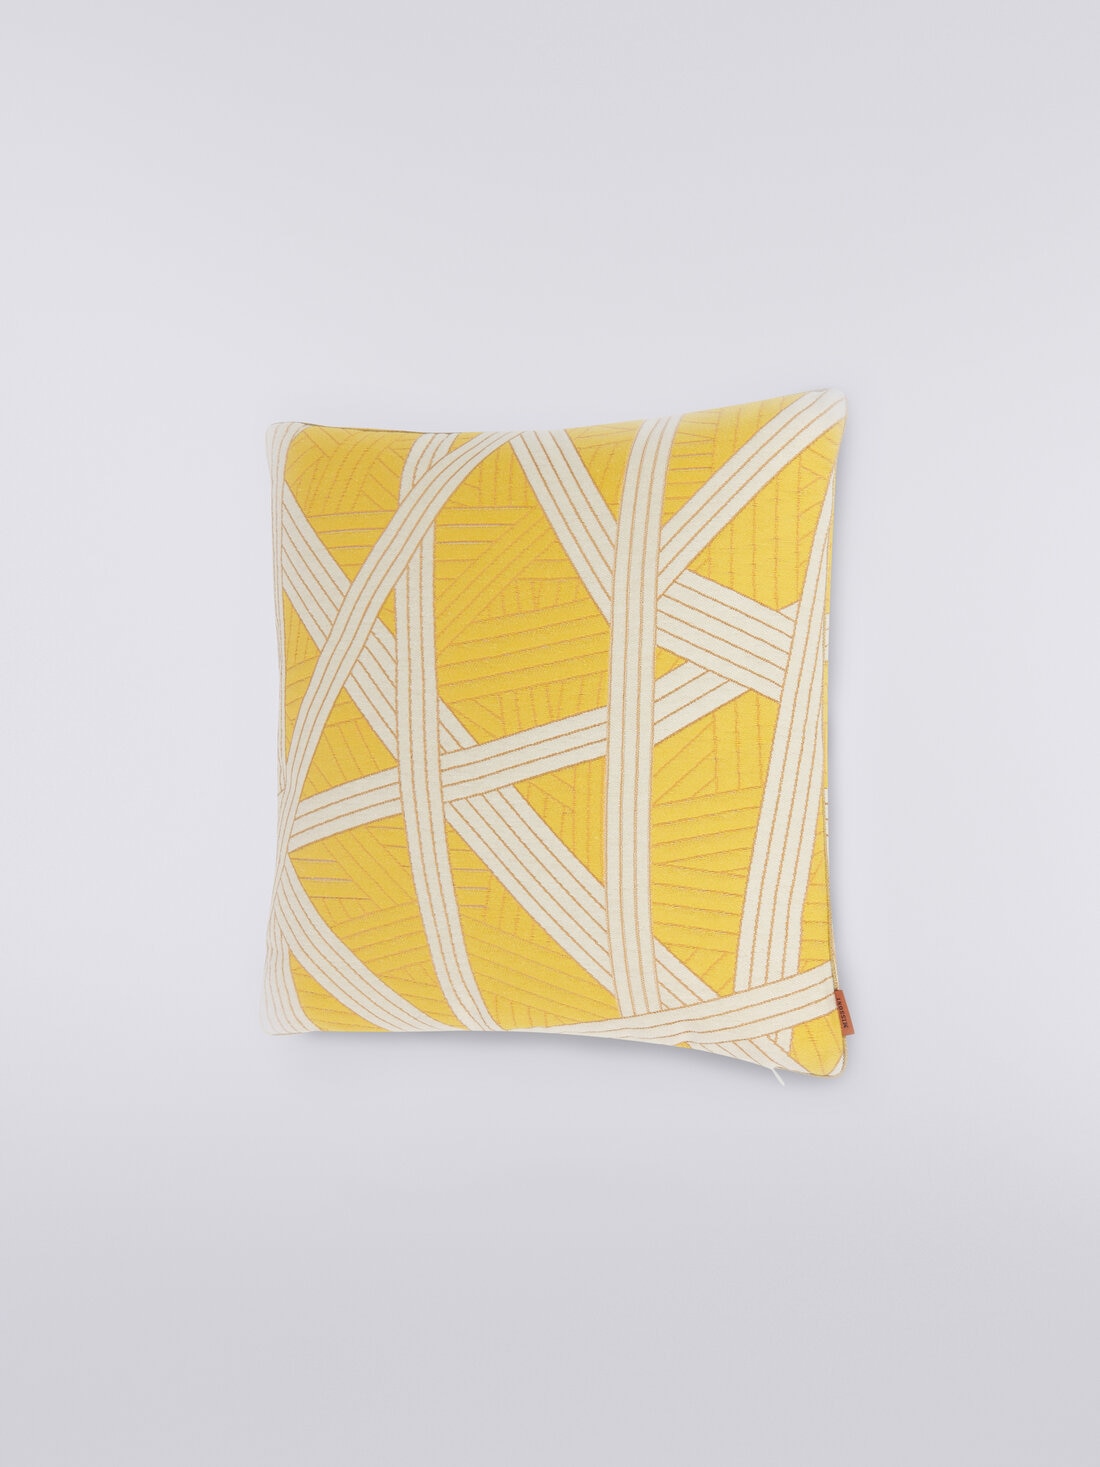 Nastri cushion 40x40 cm with stitching, Yellow  - 8051575830518 - 1